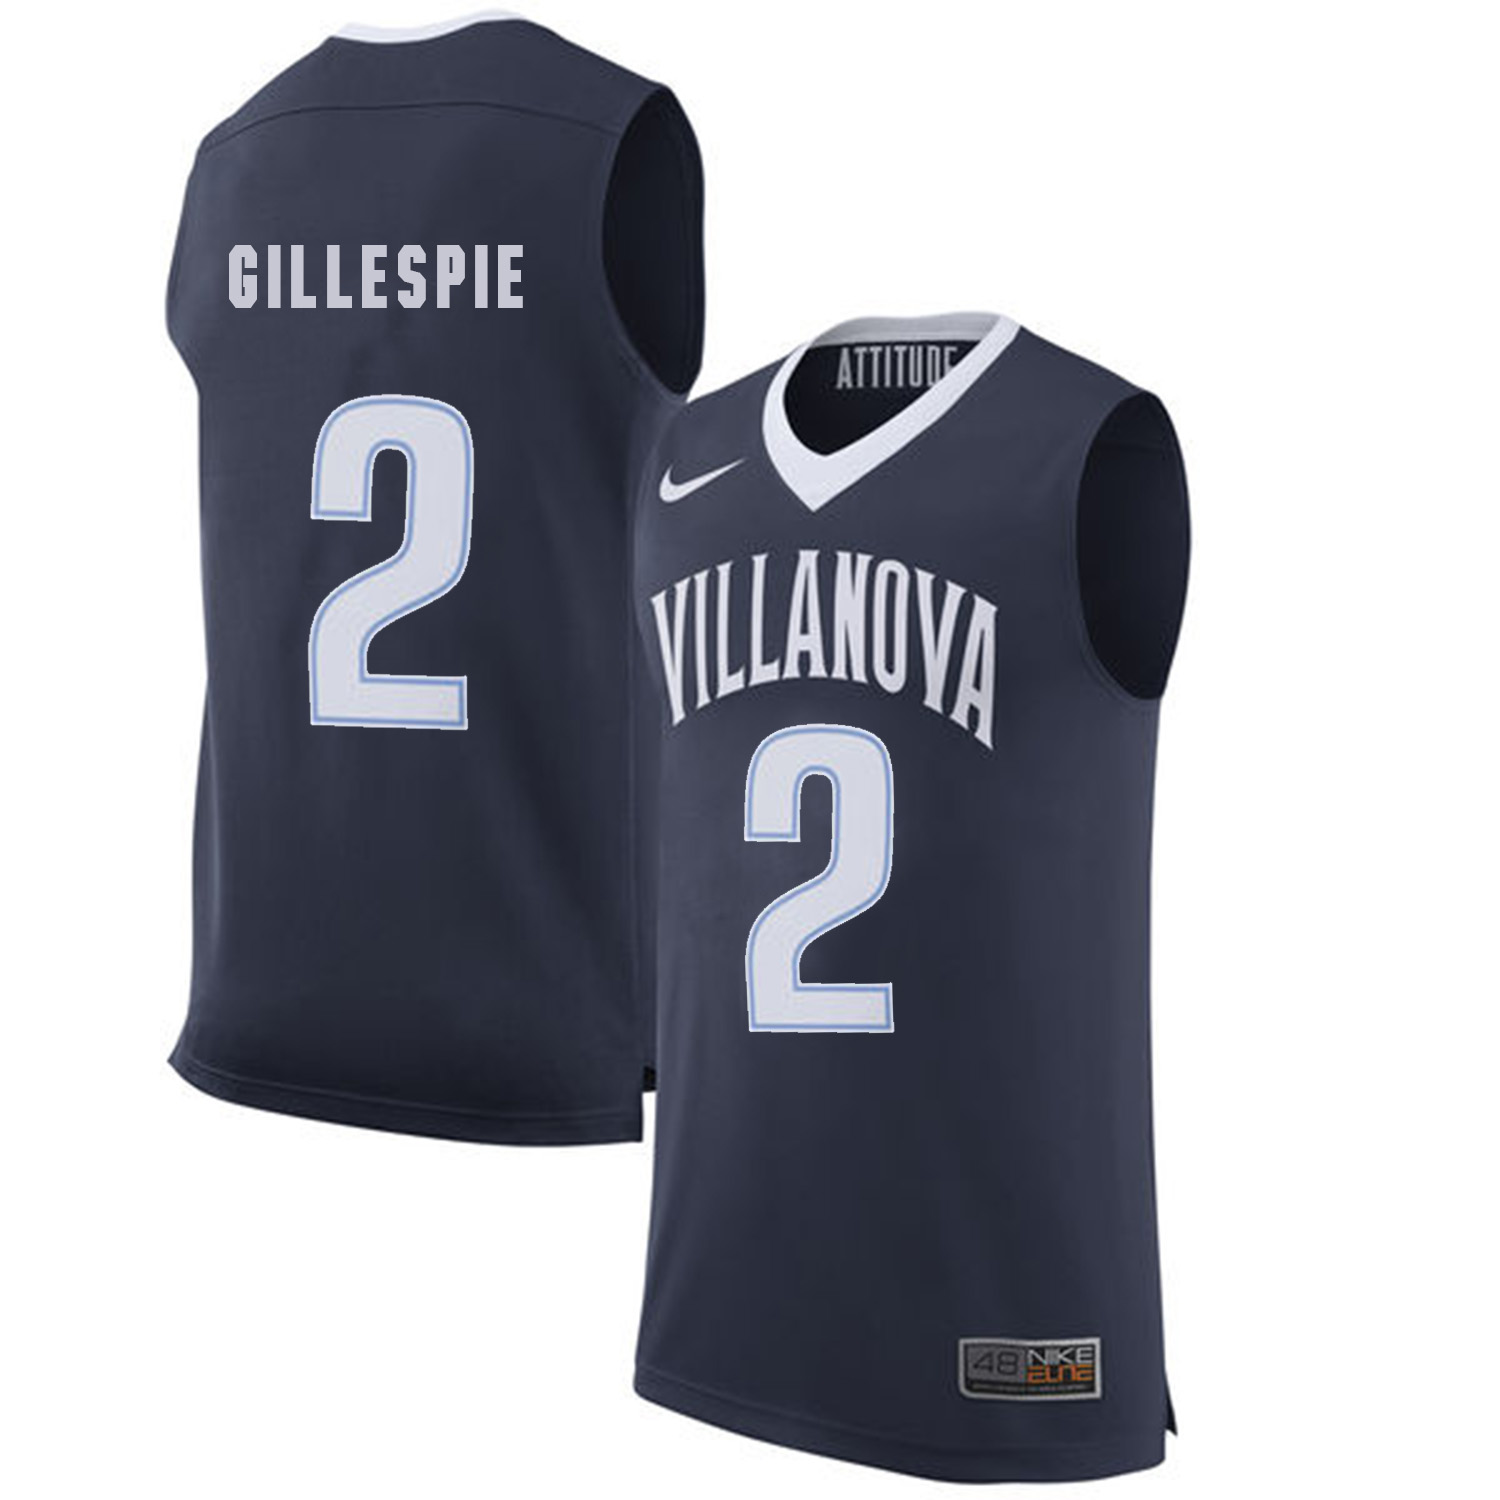 Villanova Wildcats 2 Collin Gillespie Navy College Basketball Jersey